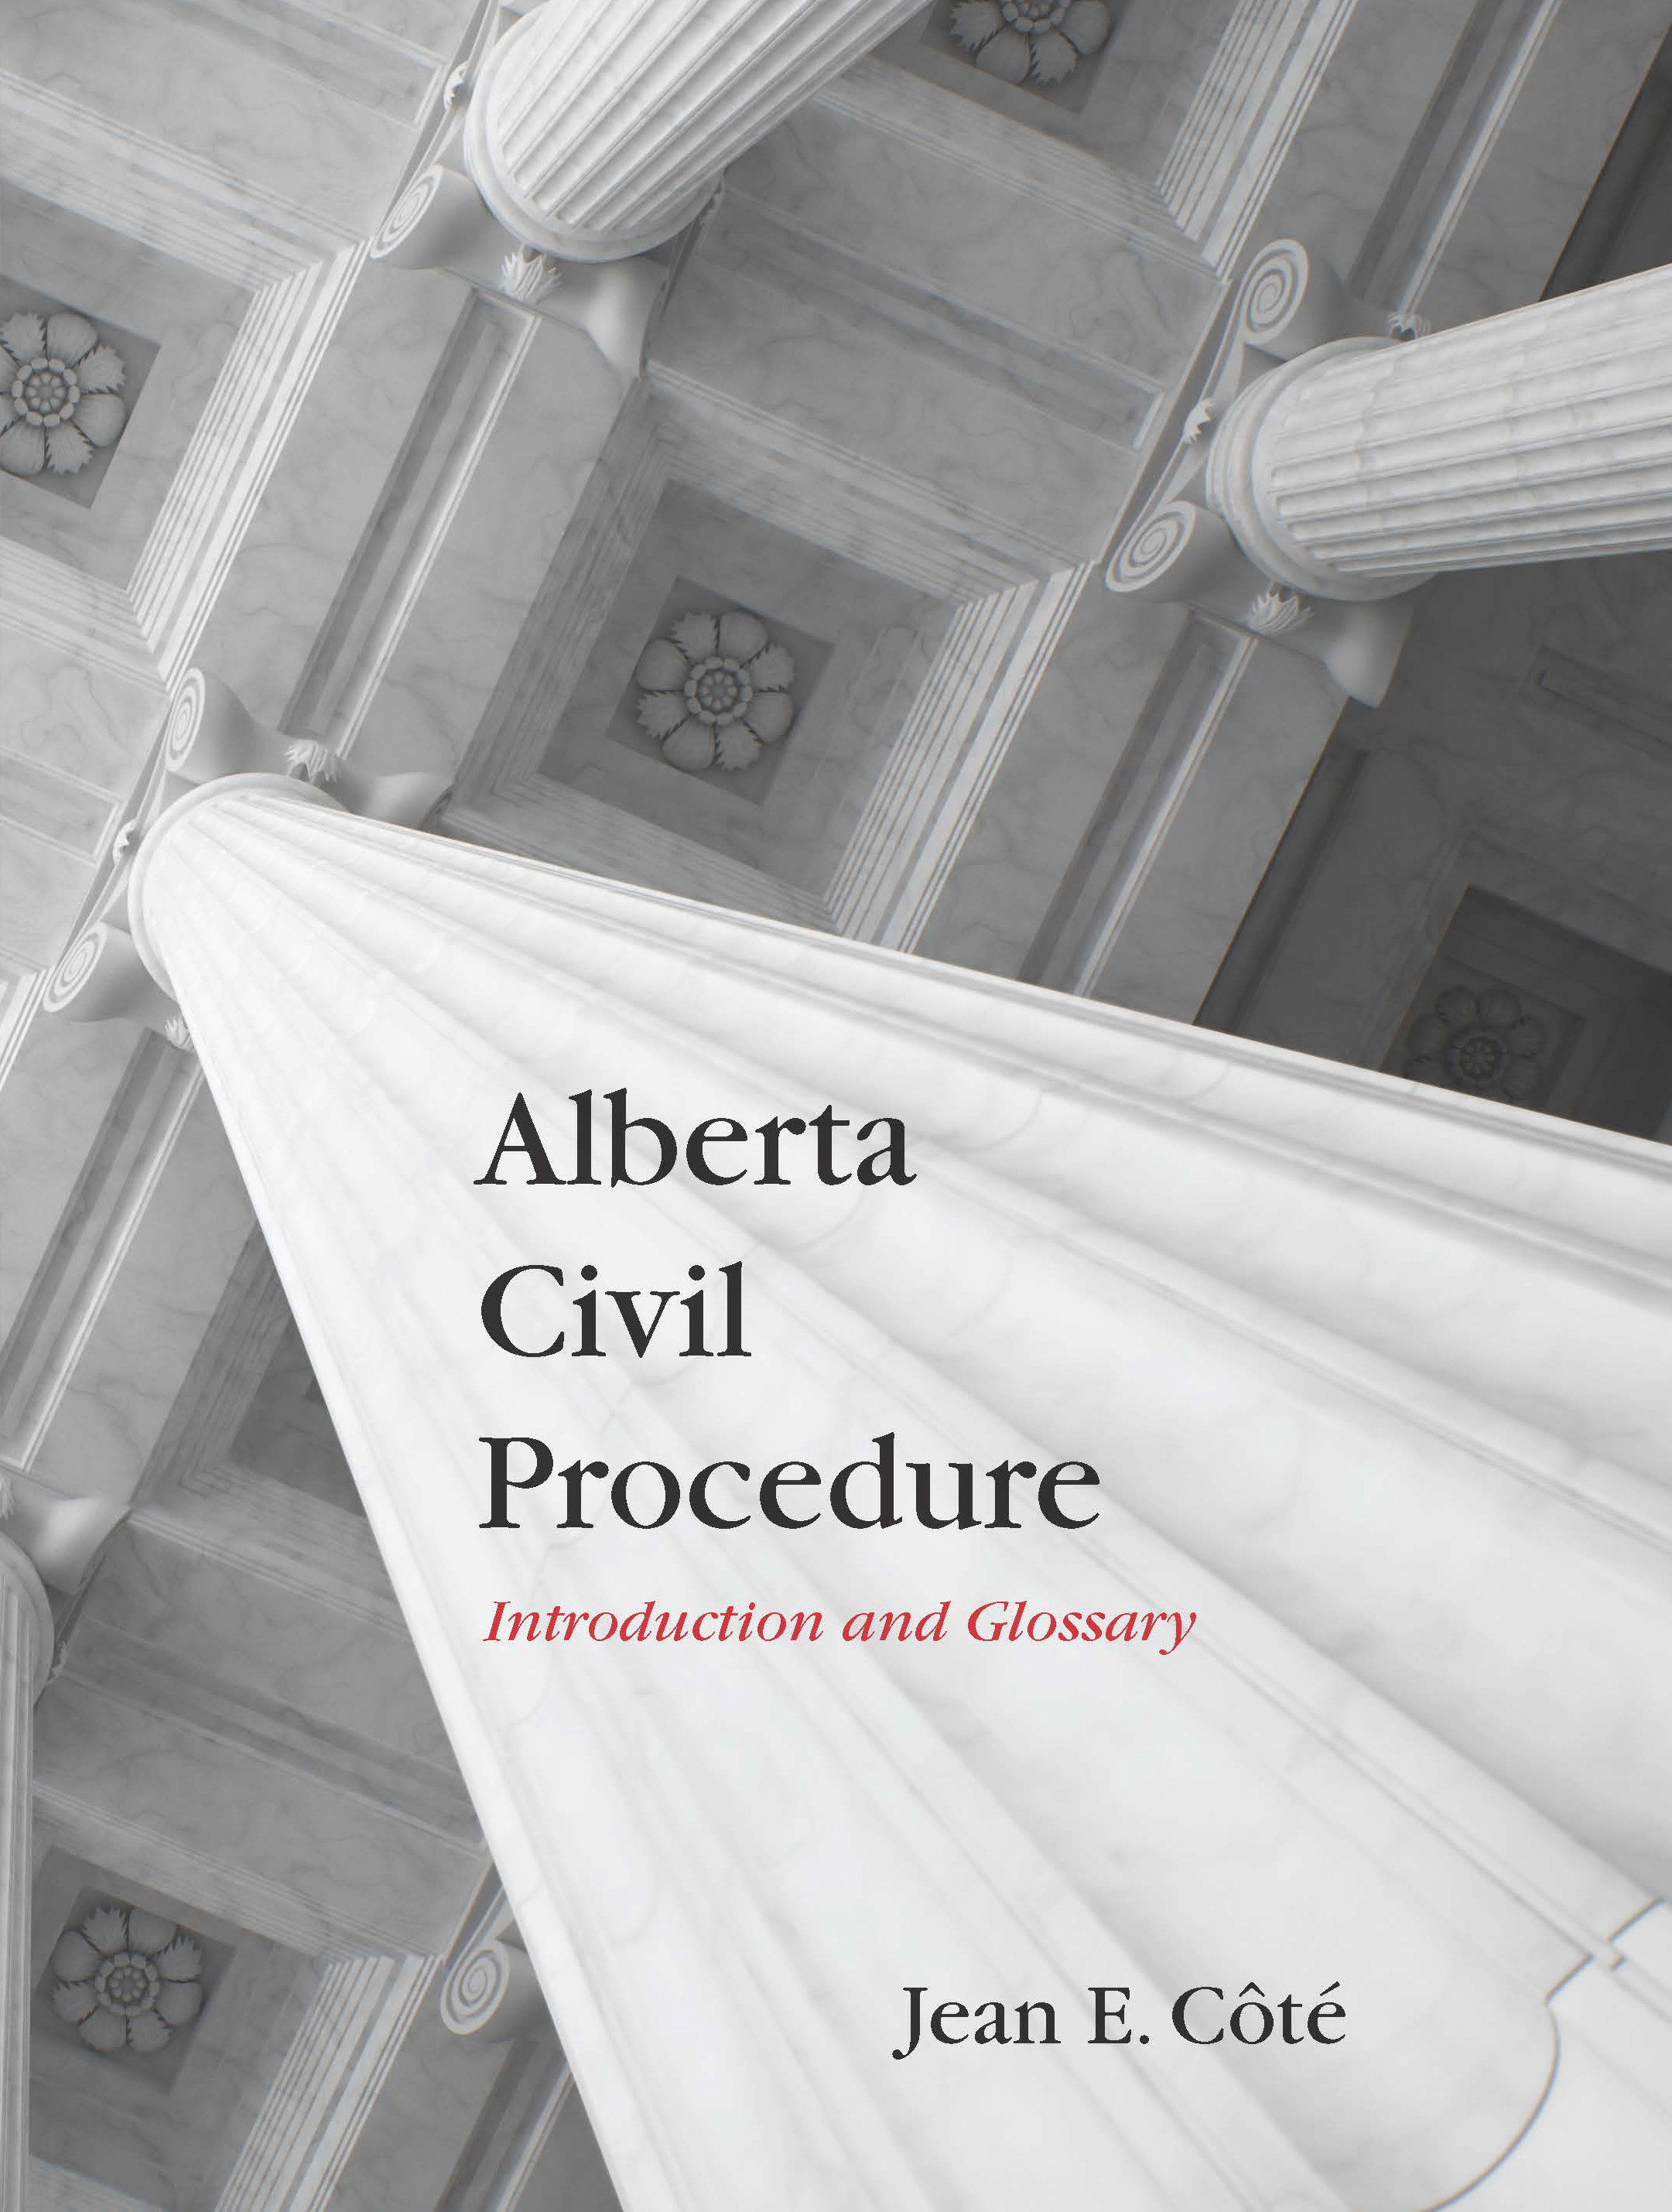 Alberta Civil Procedure Introduction and Glossary